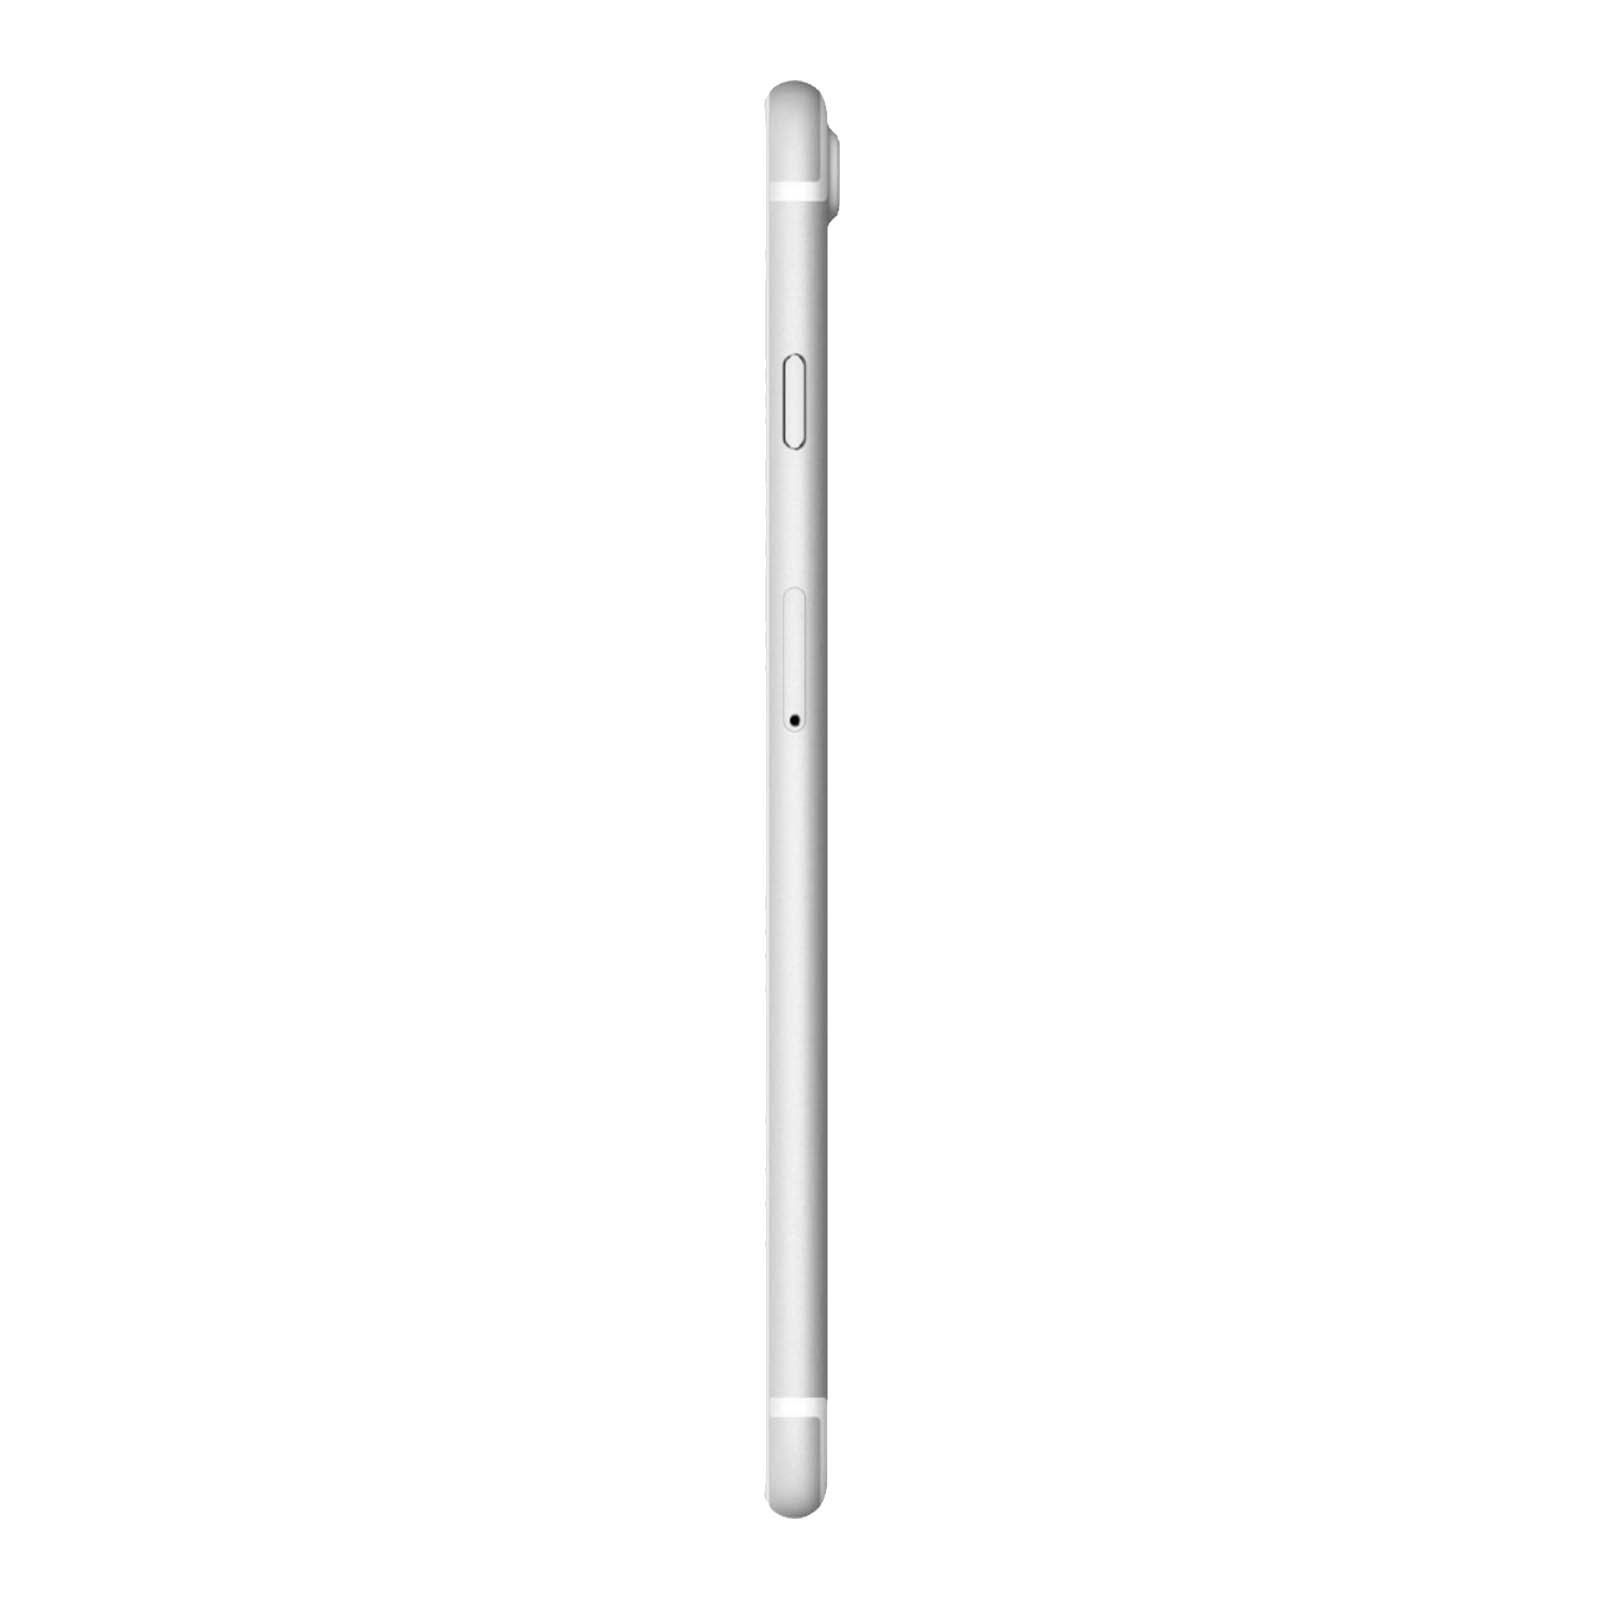 Apple iPhone 7 128GB Silver Good - Unlocked